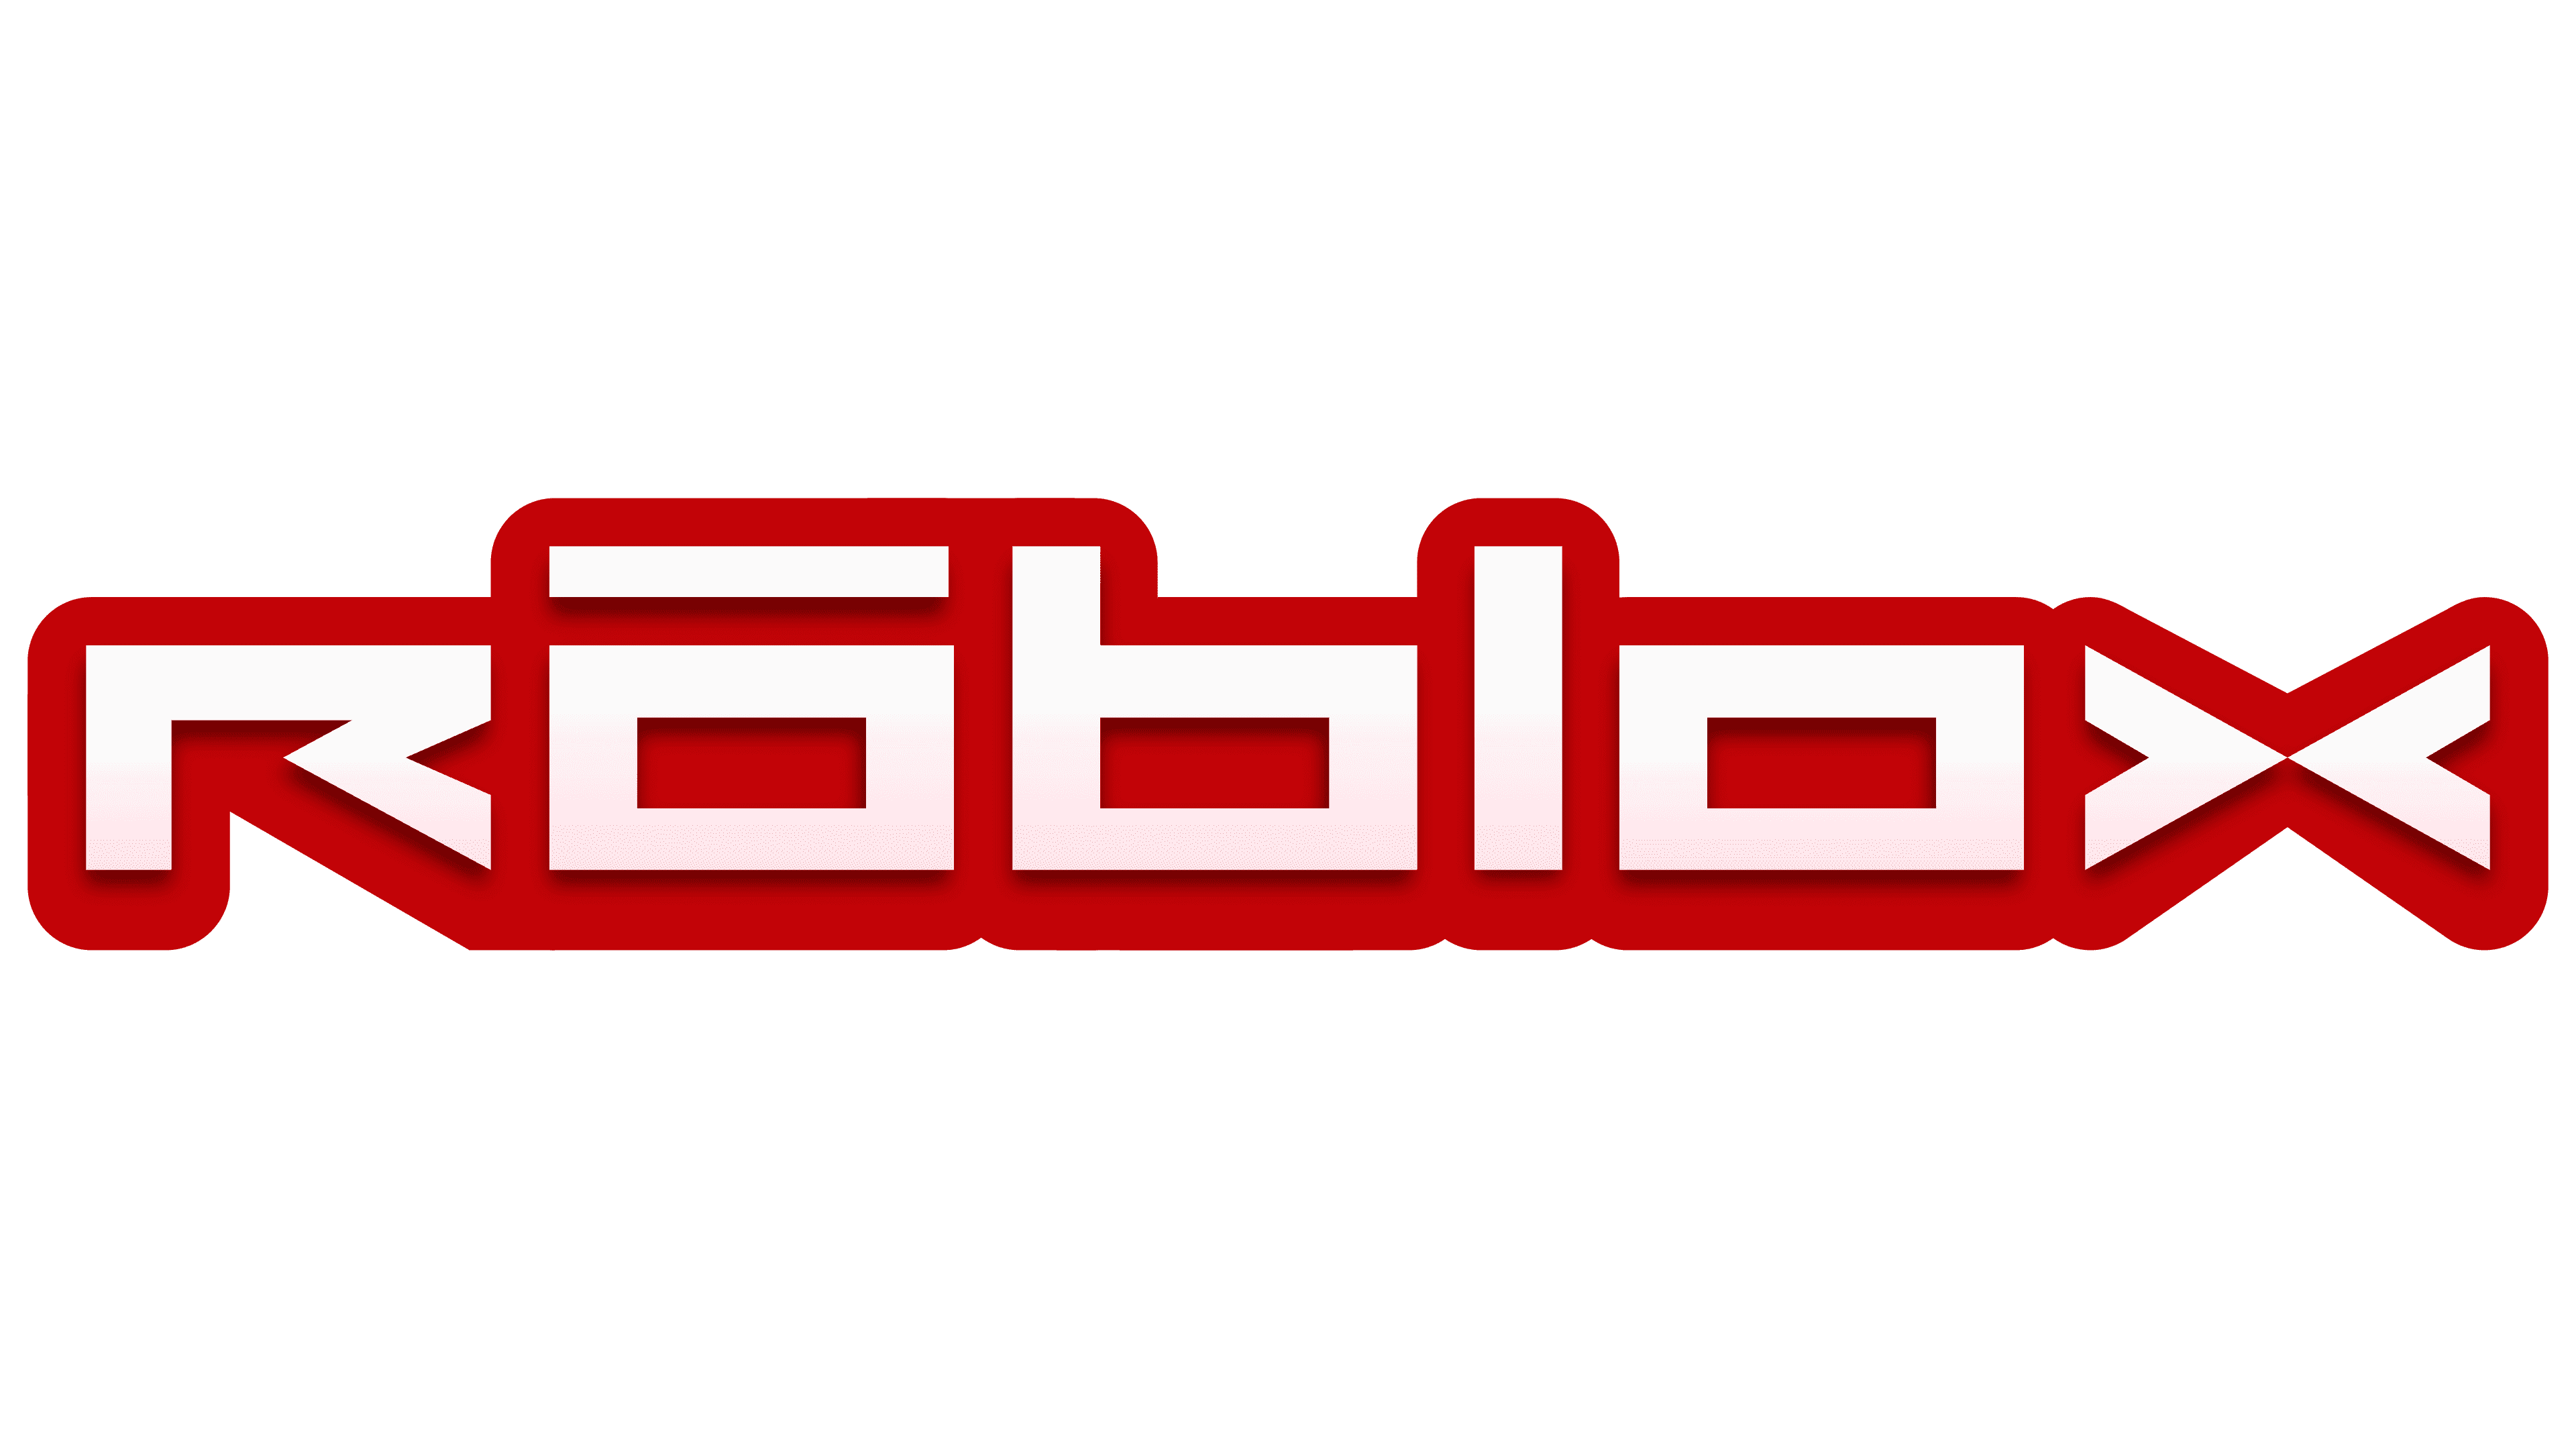 roblox logo generator